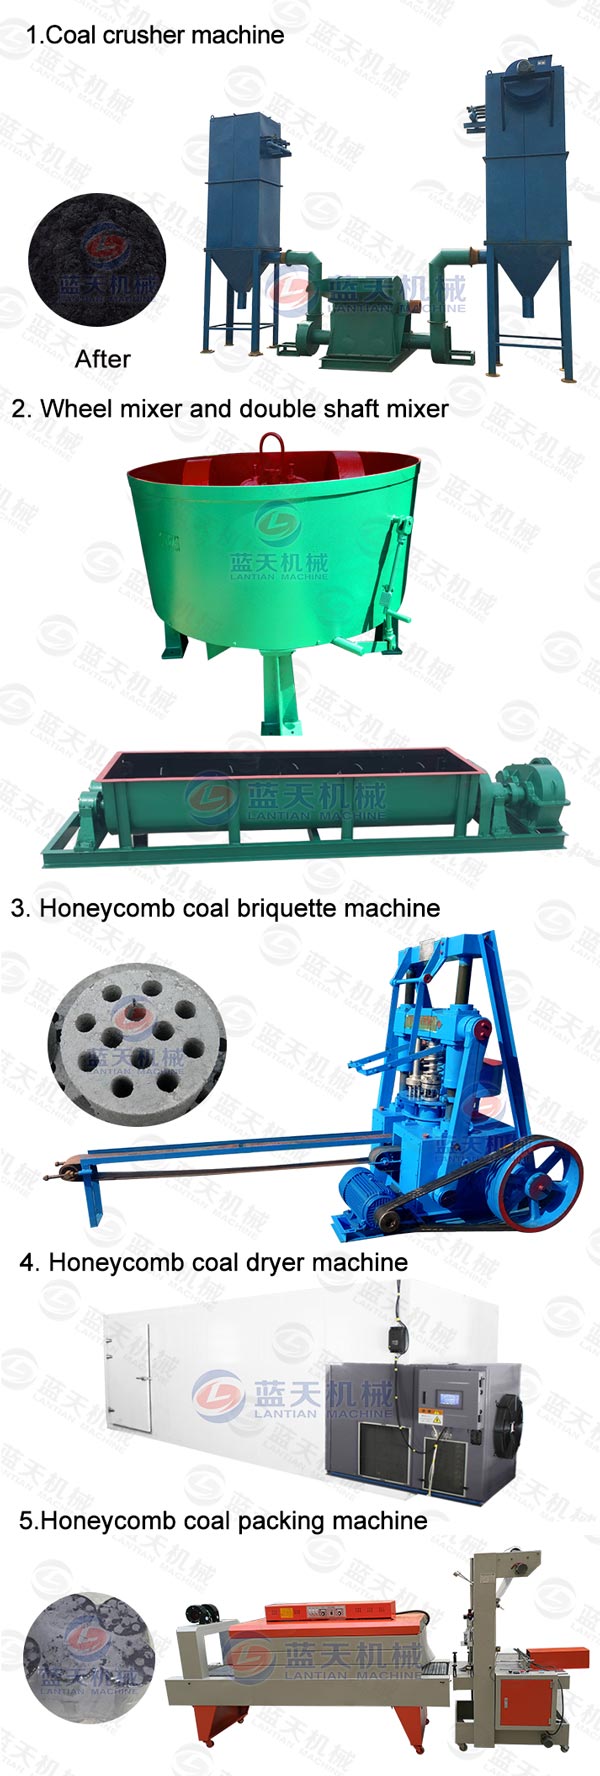 Product line of honeycomb coal briquette machine